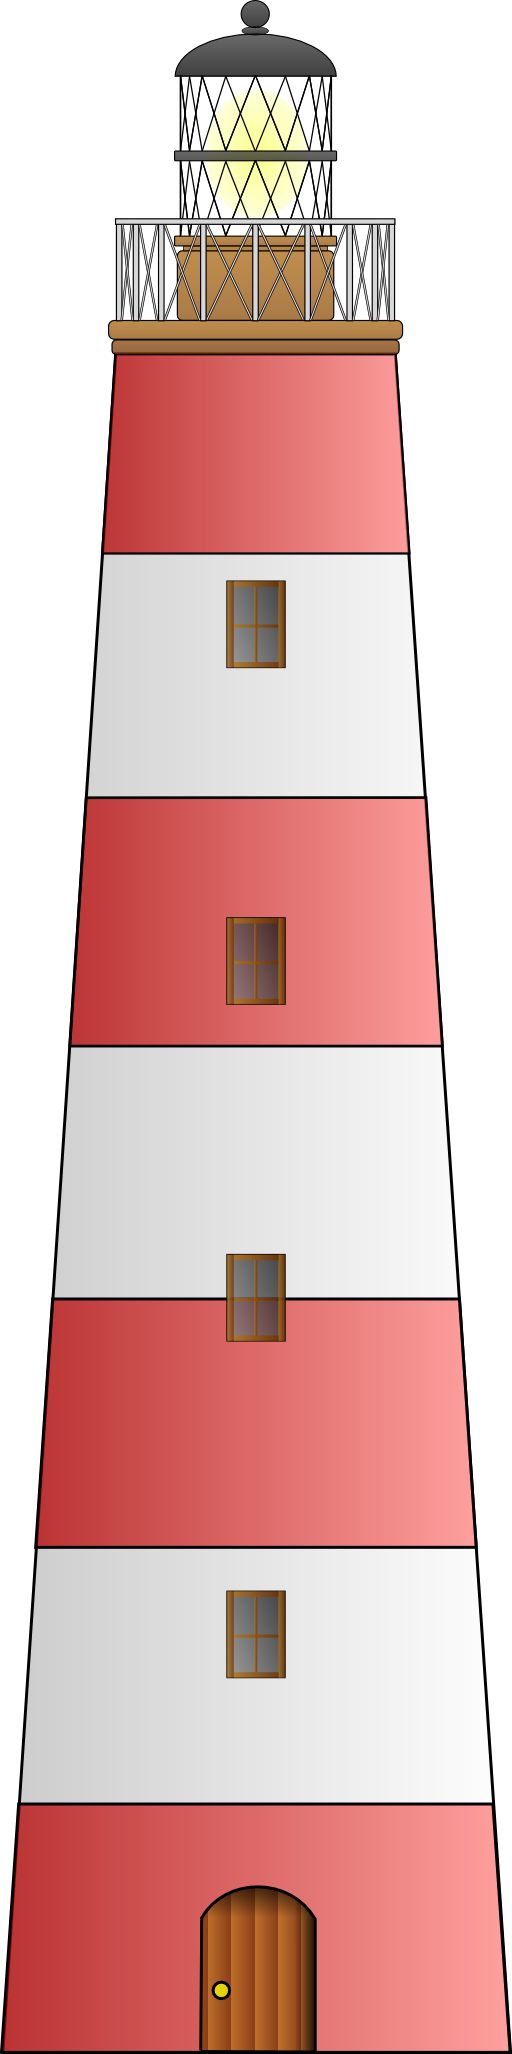 lighthouse clipart svg